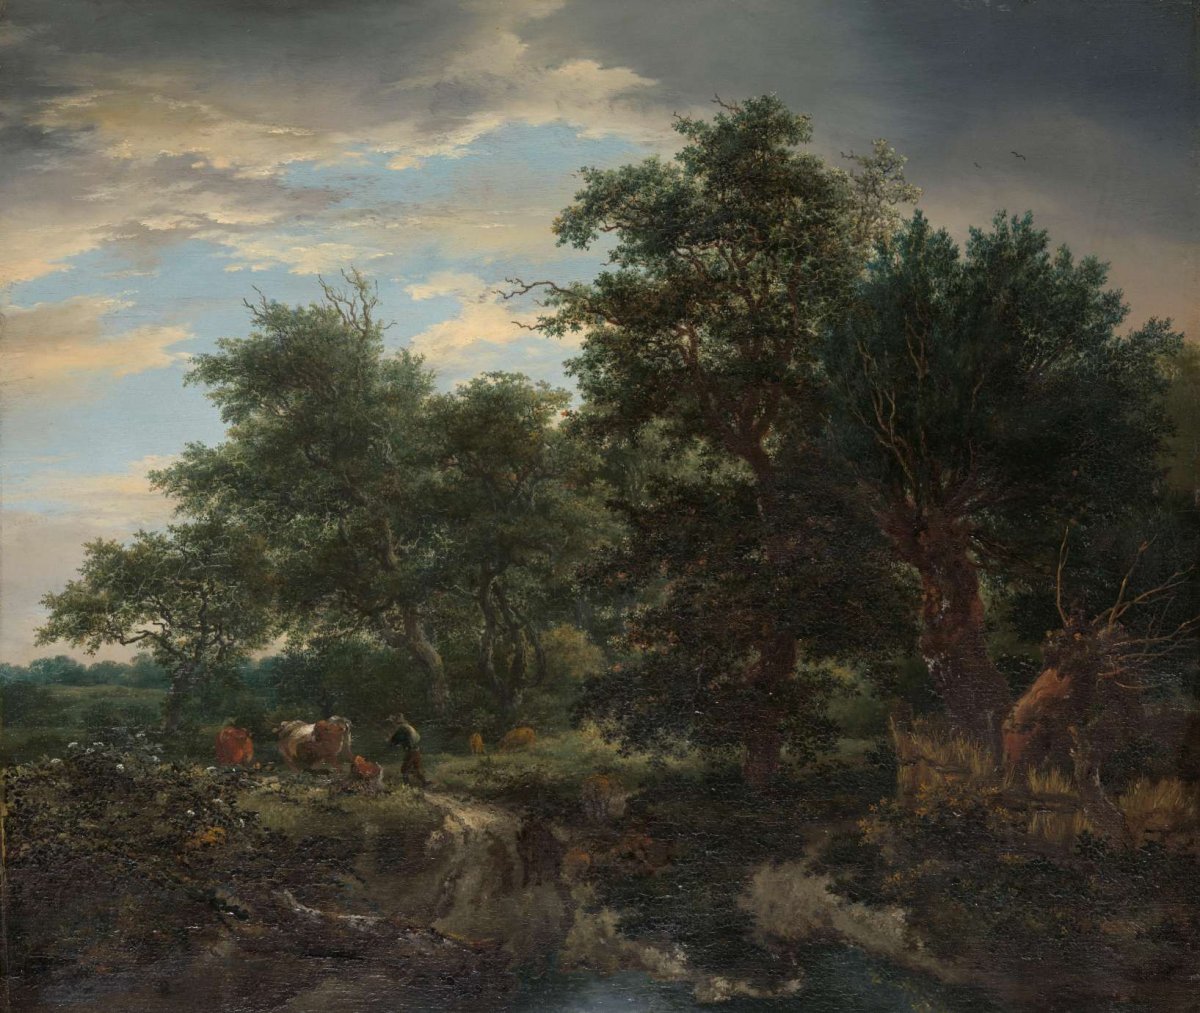 Forest scene, Jacob Isaacksz van Ruisdael, 1653